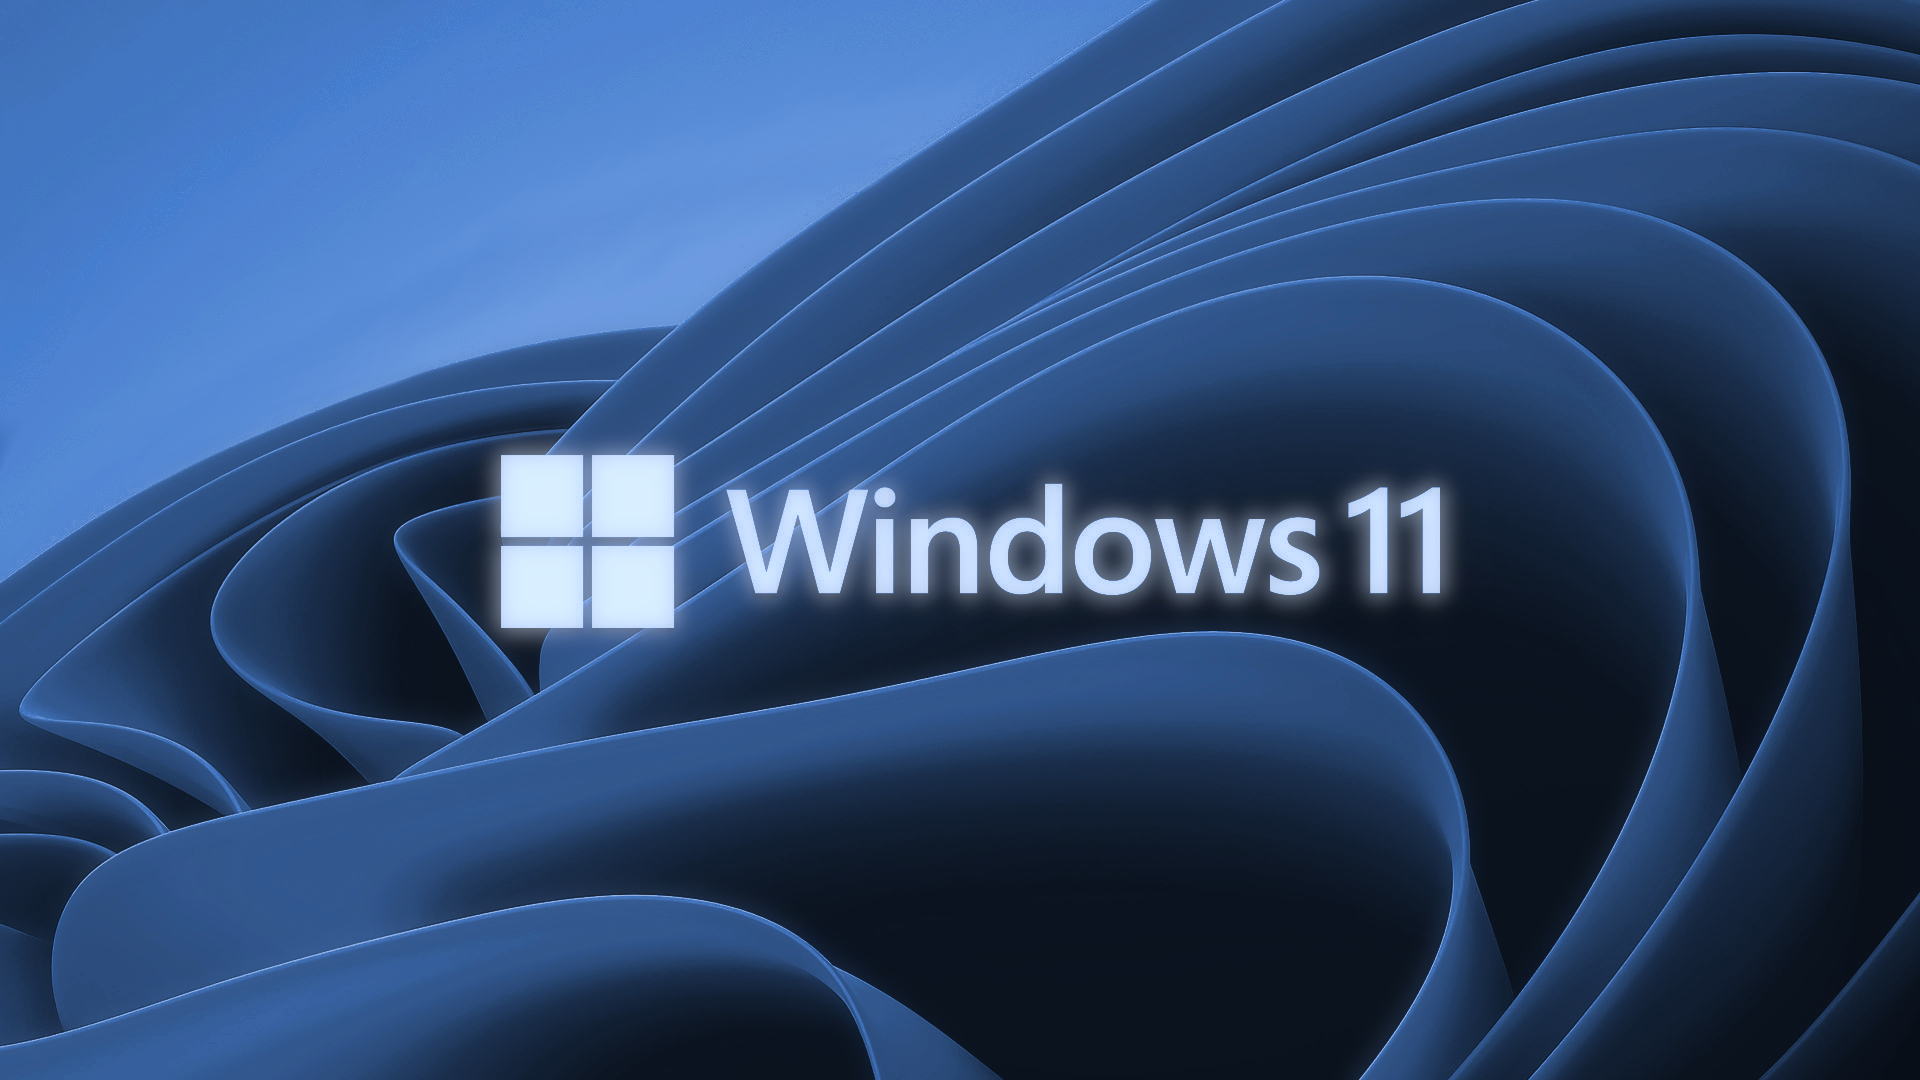 Windows 11 Simple Microsoft Operating System Windows Logo Minimalism 1920x1080